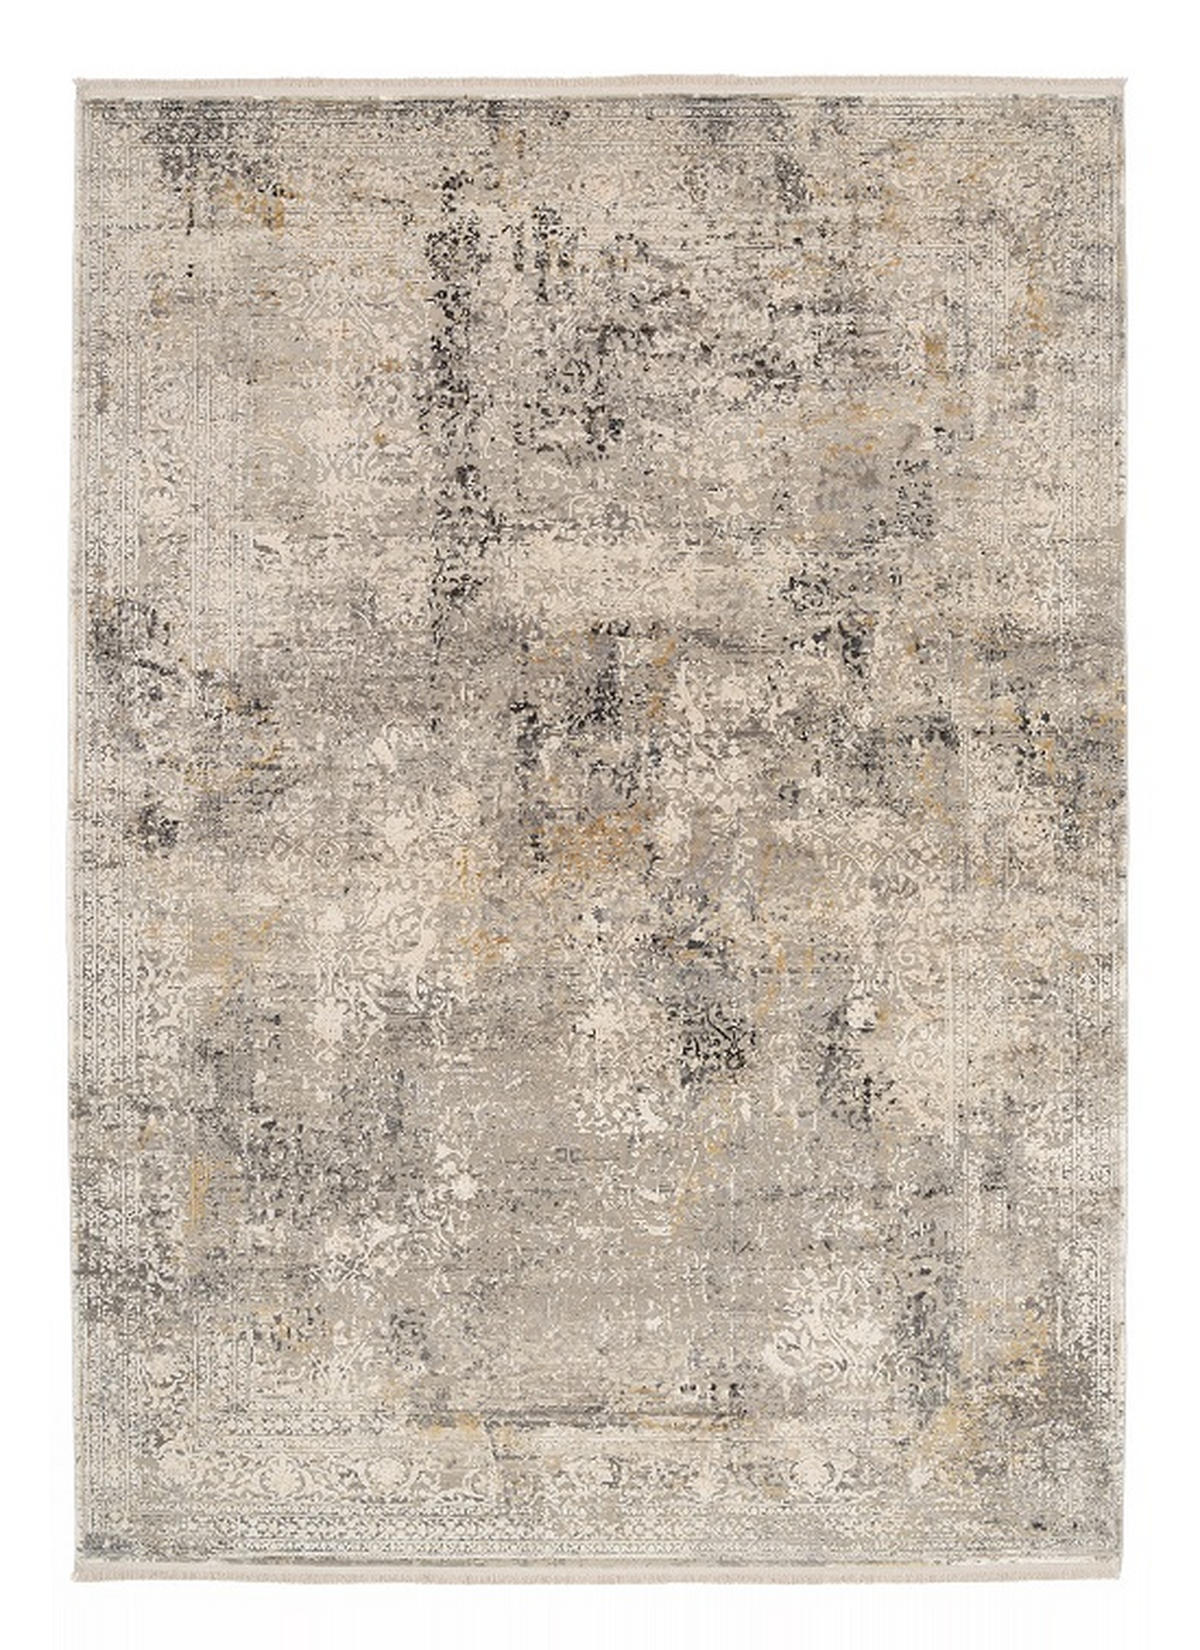 WEBTEPPICH 80/150 cm Avignon  - Dunkelgrau/Hellgrau, Design, Textil (80/150cm) - Dieter Knoll